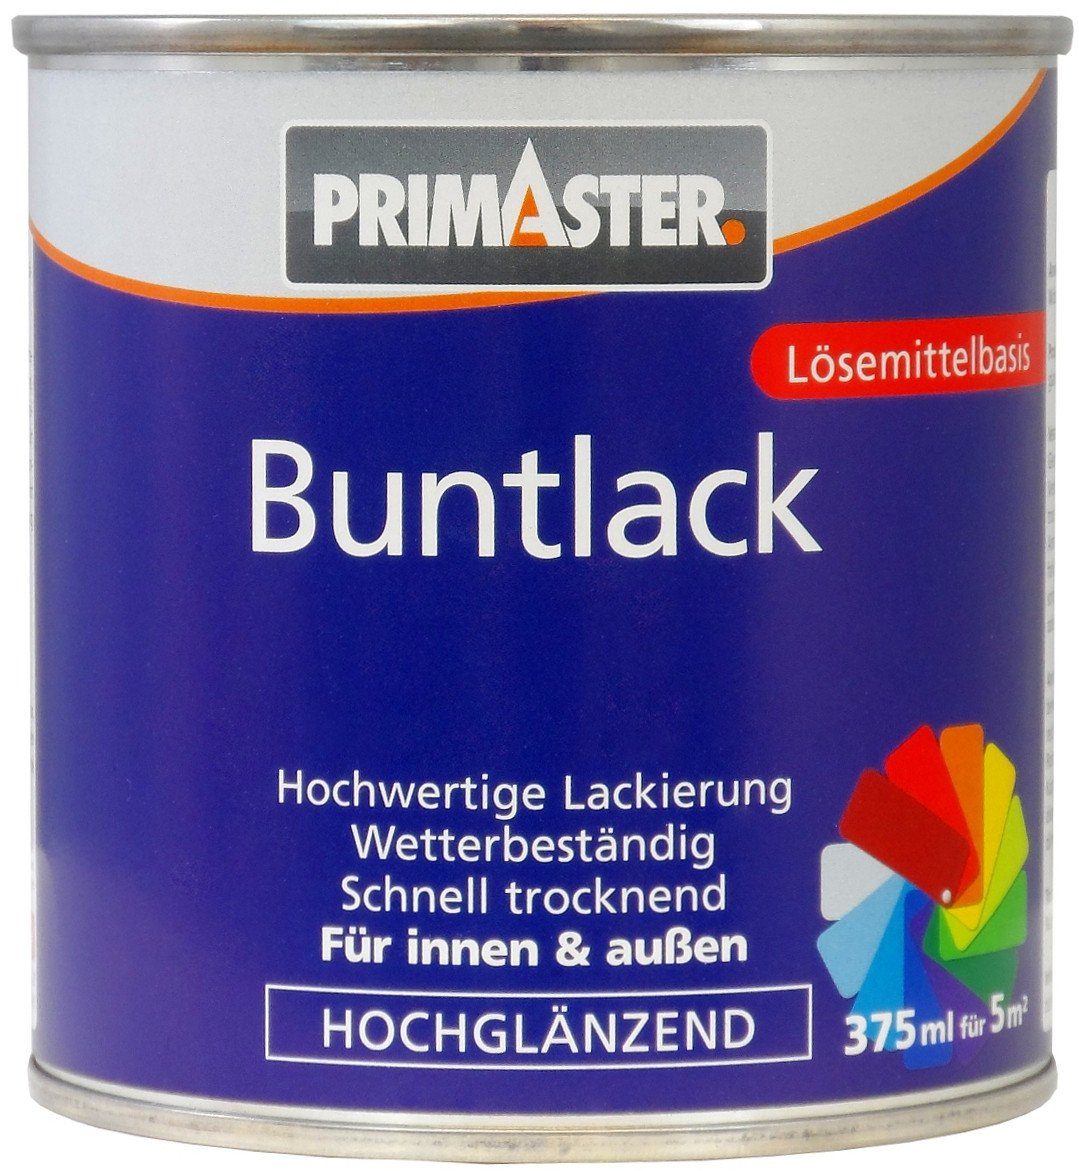 Primaster taubenblau RAL Acryl-Buntlack 5014 375 ml Primaster Buntlack